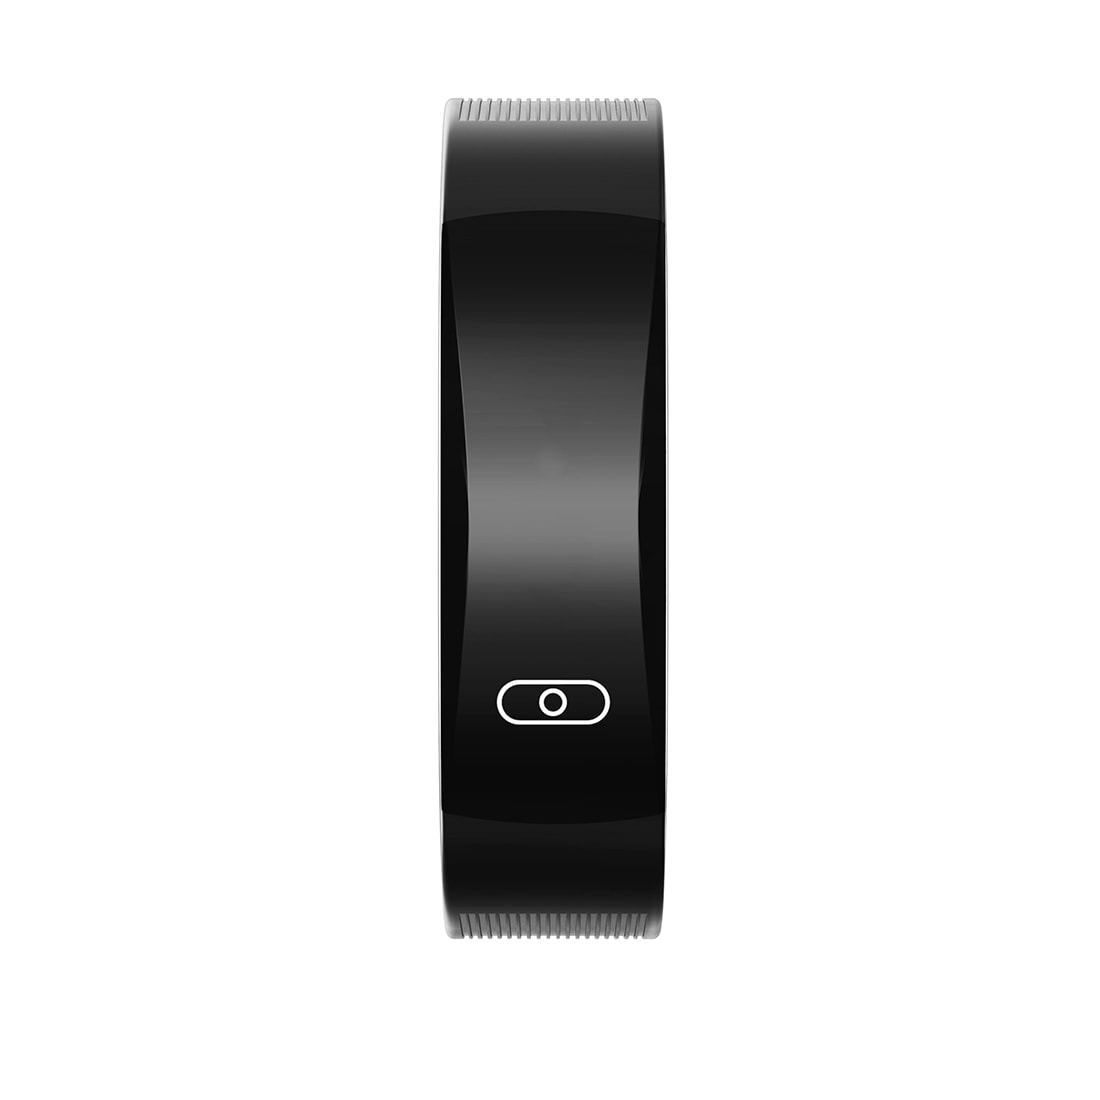 Bluetooth Smartband / Smart Watch